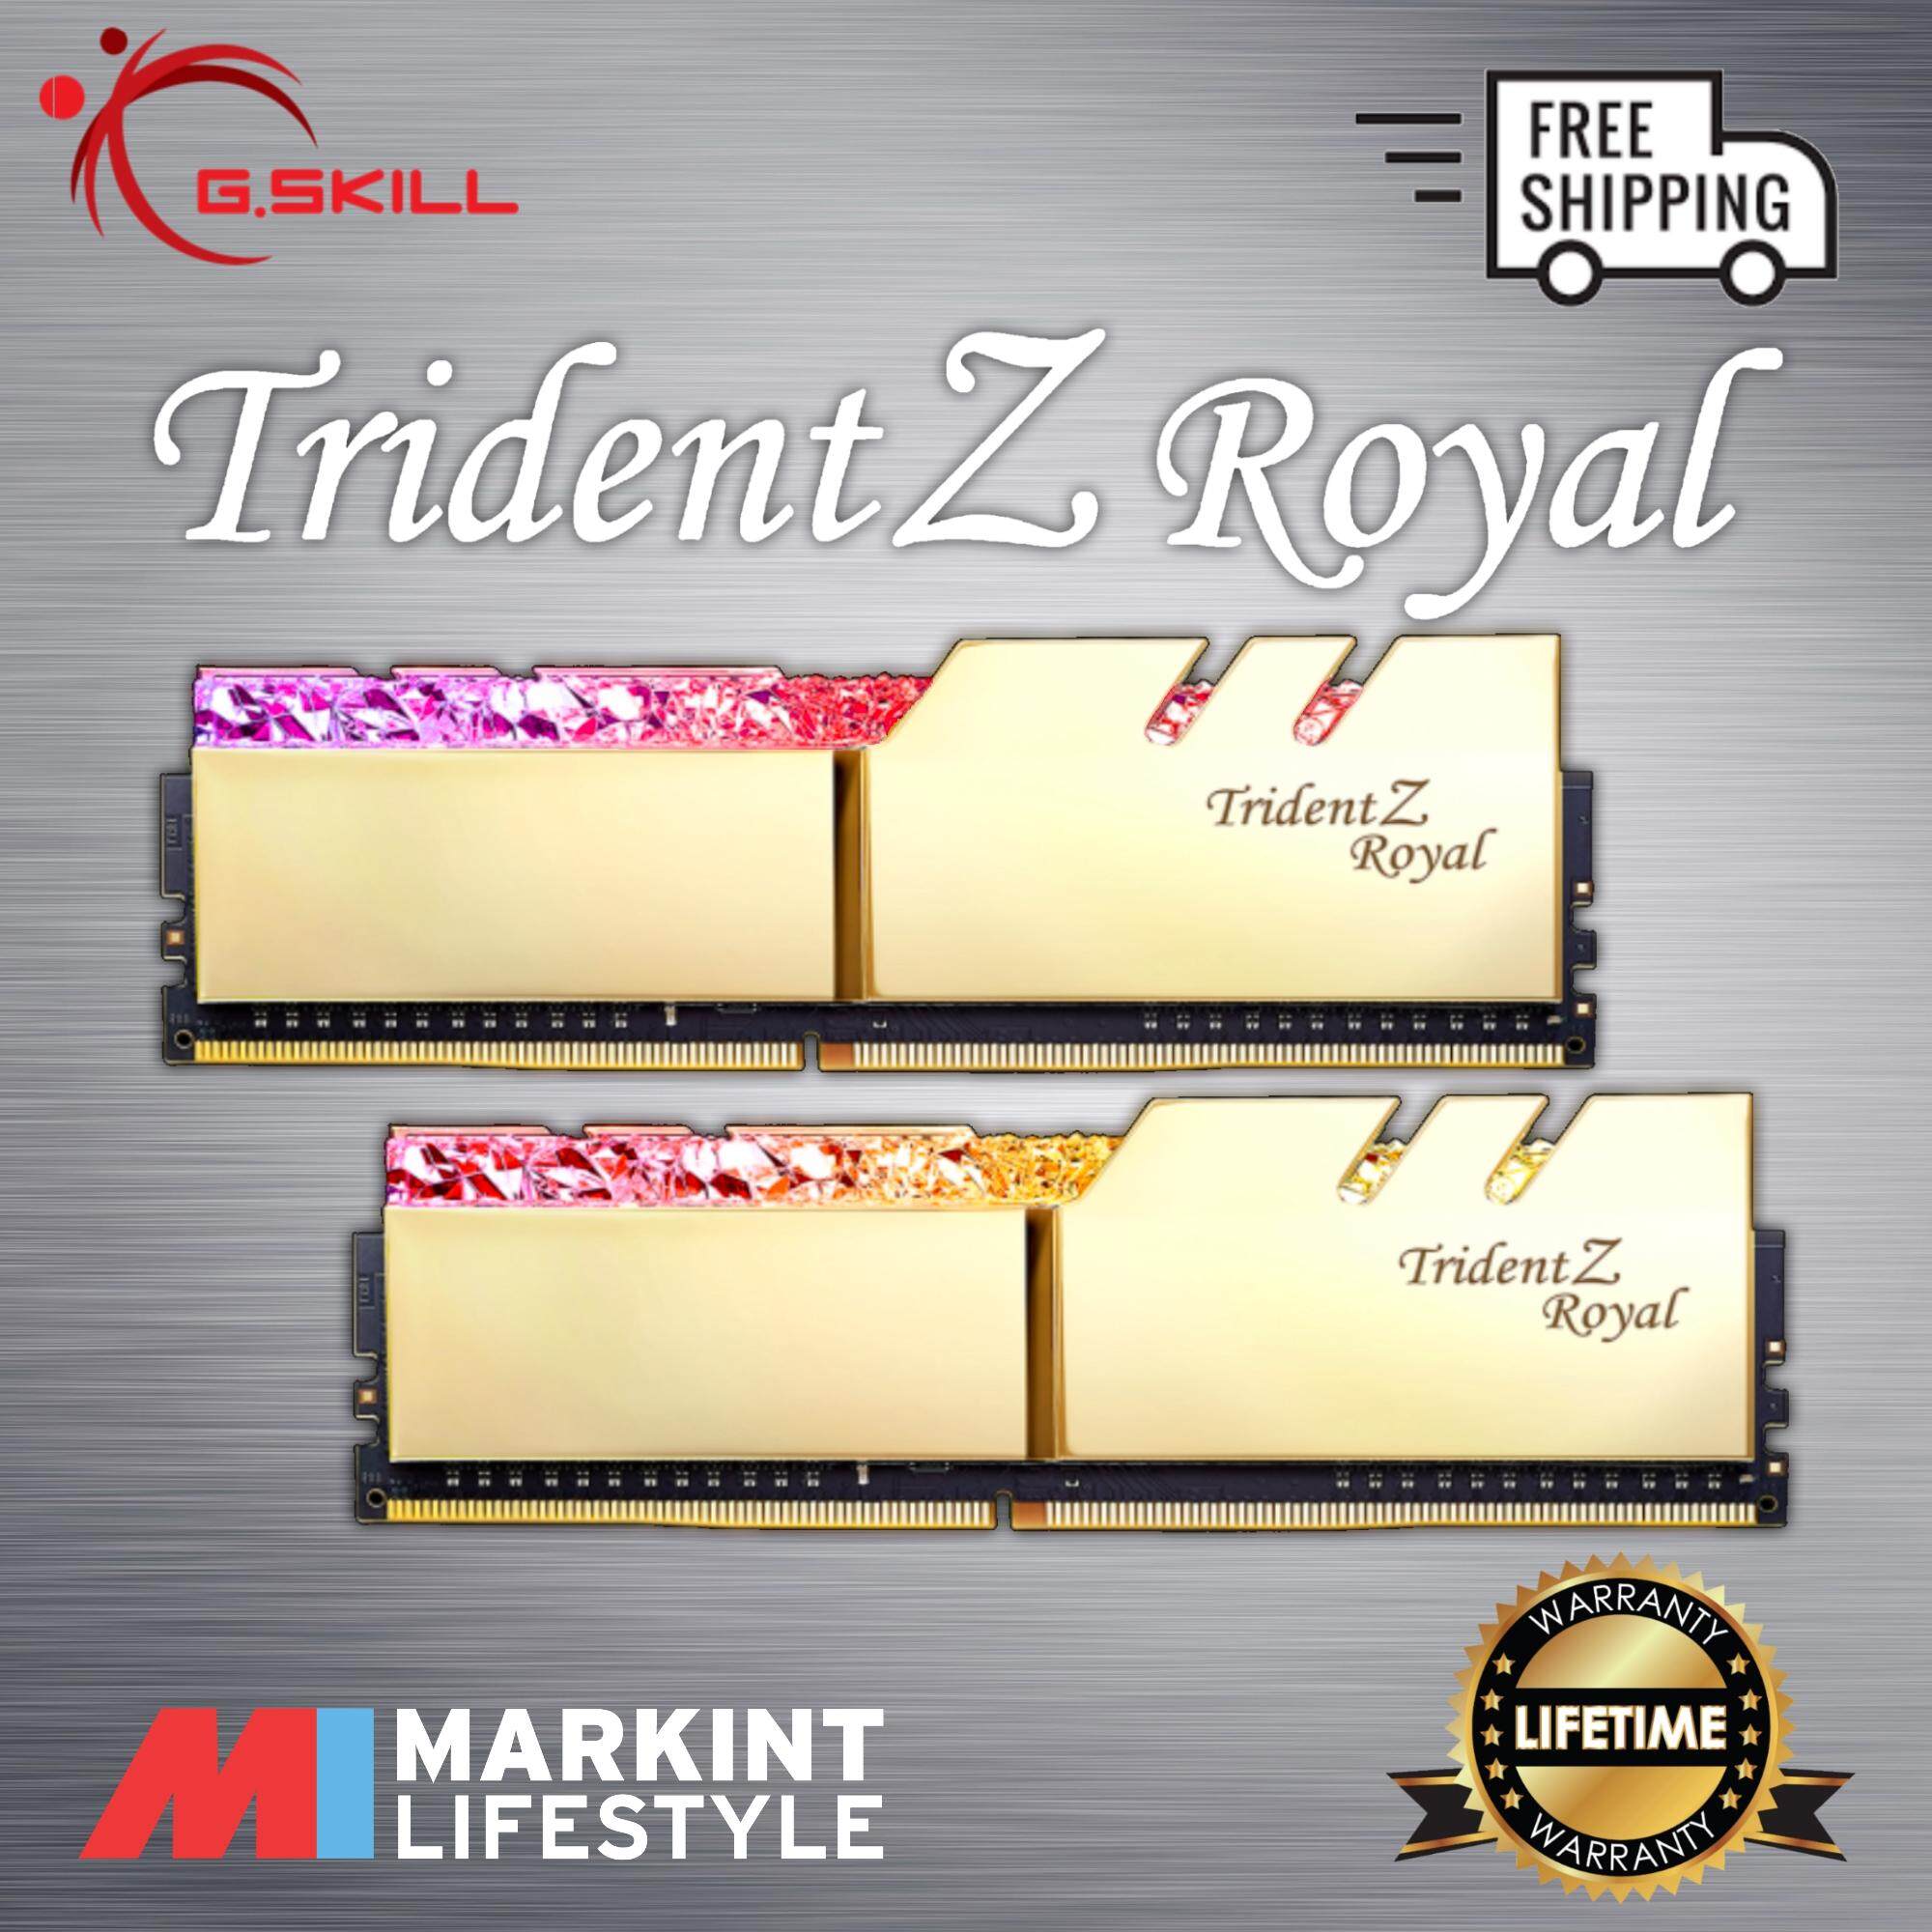 G.SKILL TRIDENT Z ROYAL GOLD 32GB (2 x 16GB) RGB DDR4 3200 C16